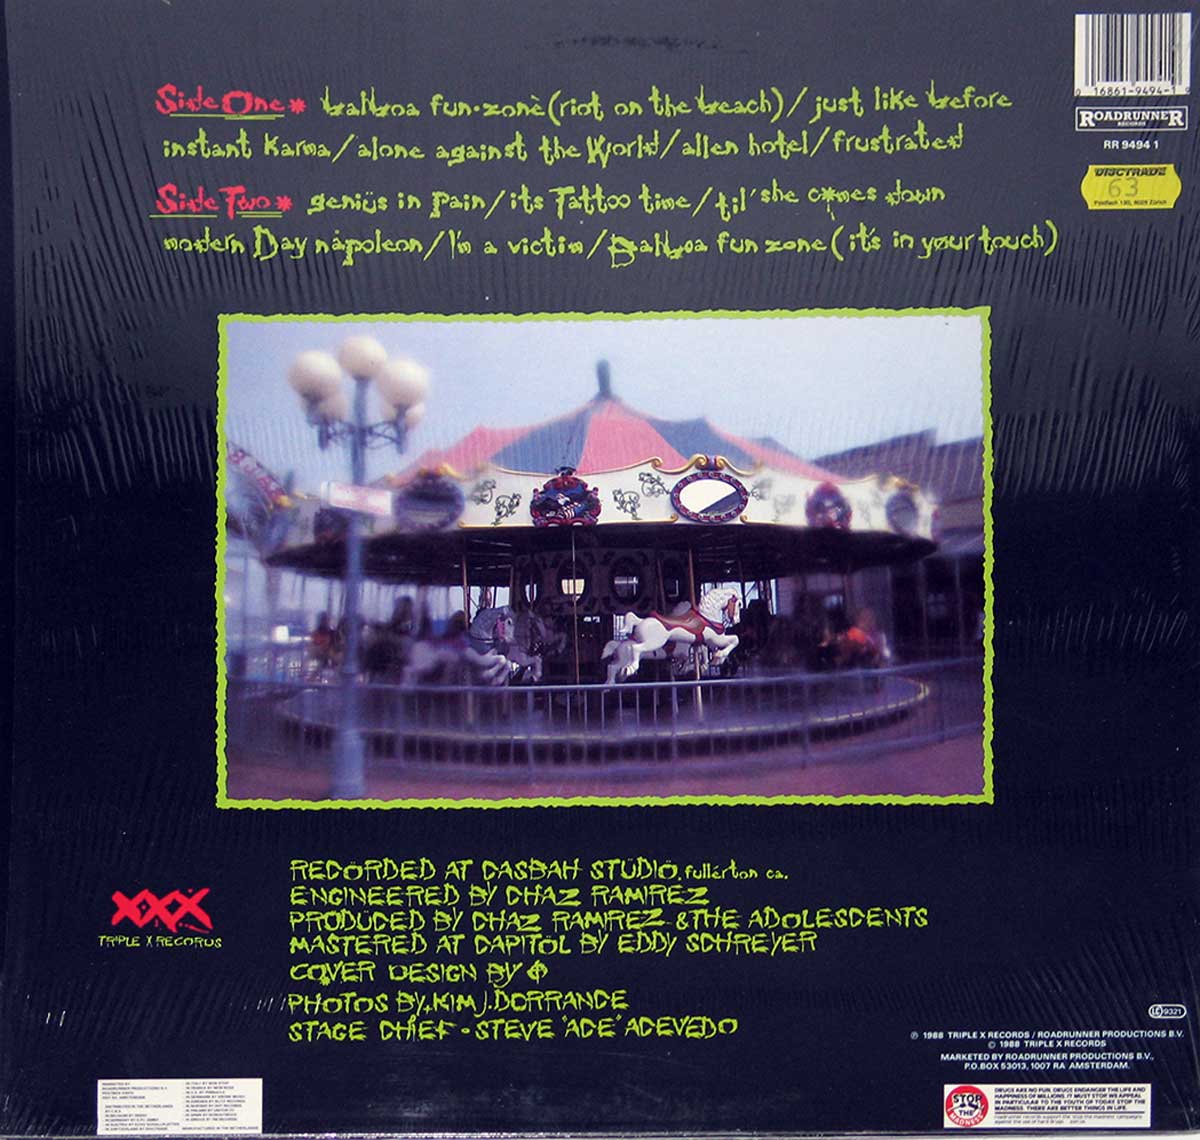 High Resolution Photo Album Back Cover of ADOLESCENTS - Balboa Fun Zone https://vinyl-records.nl